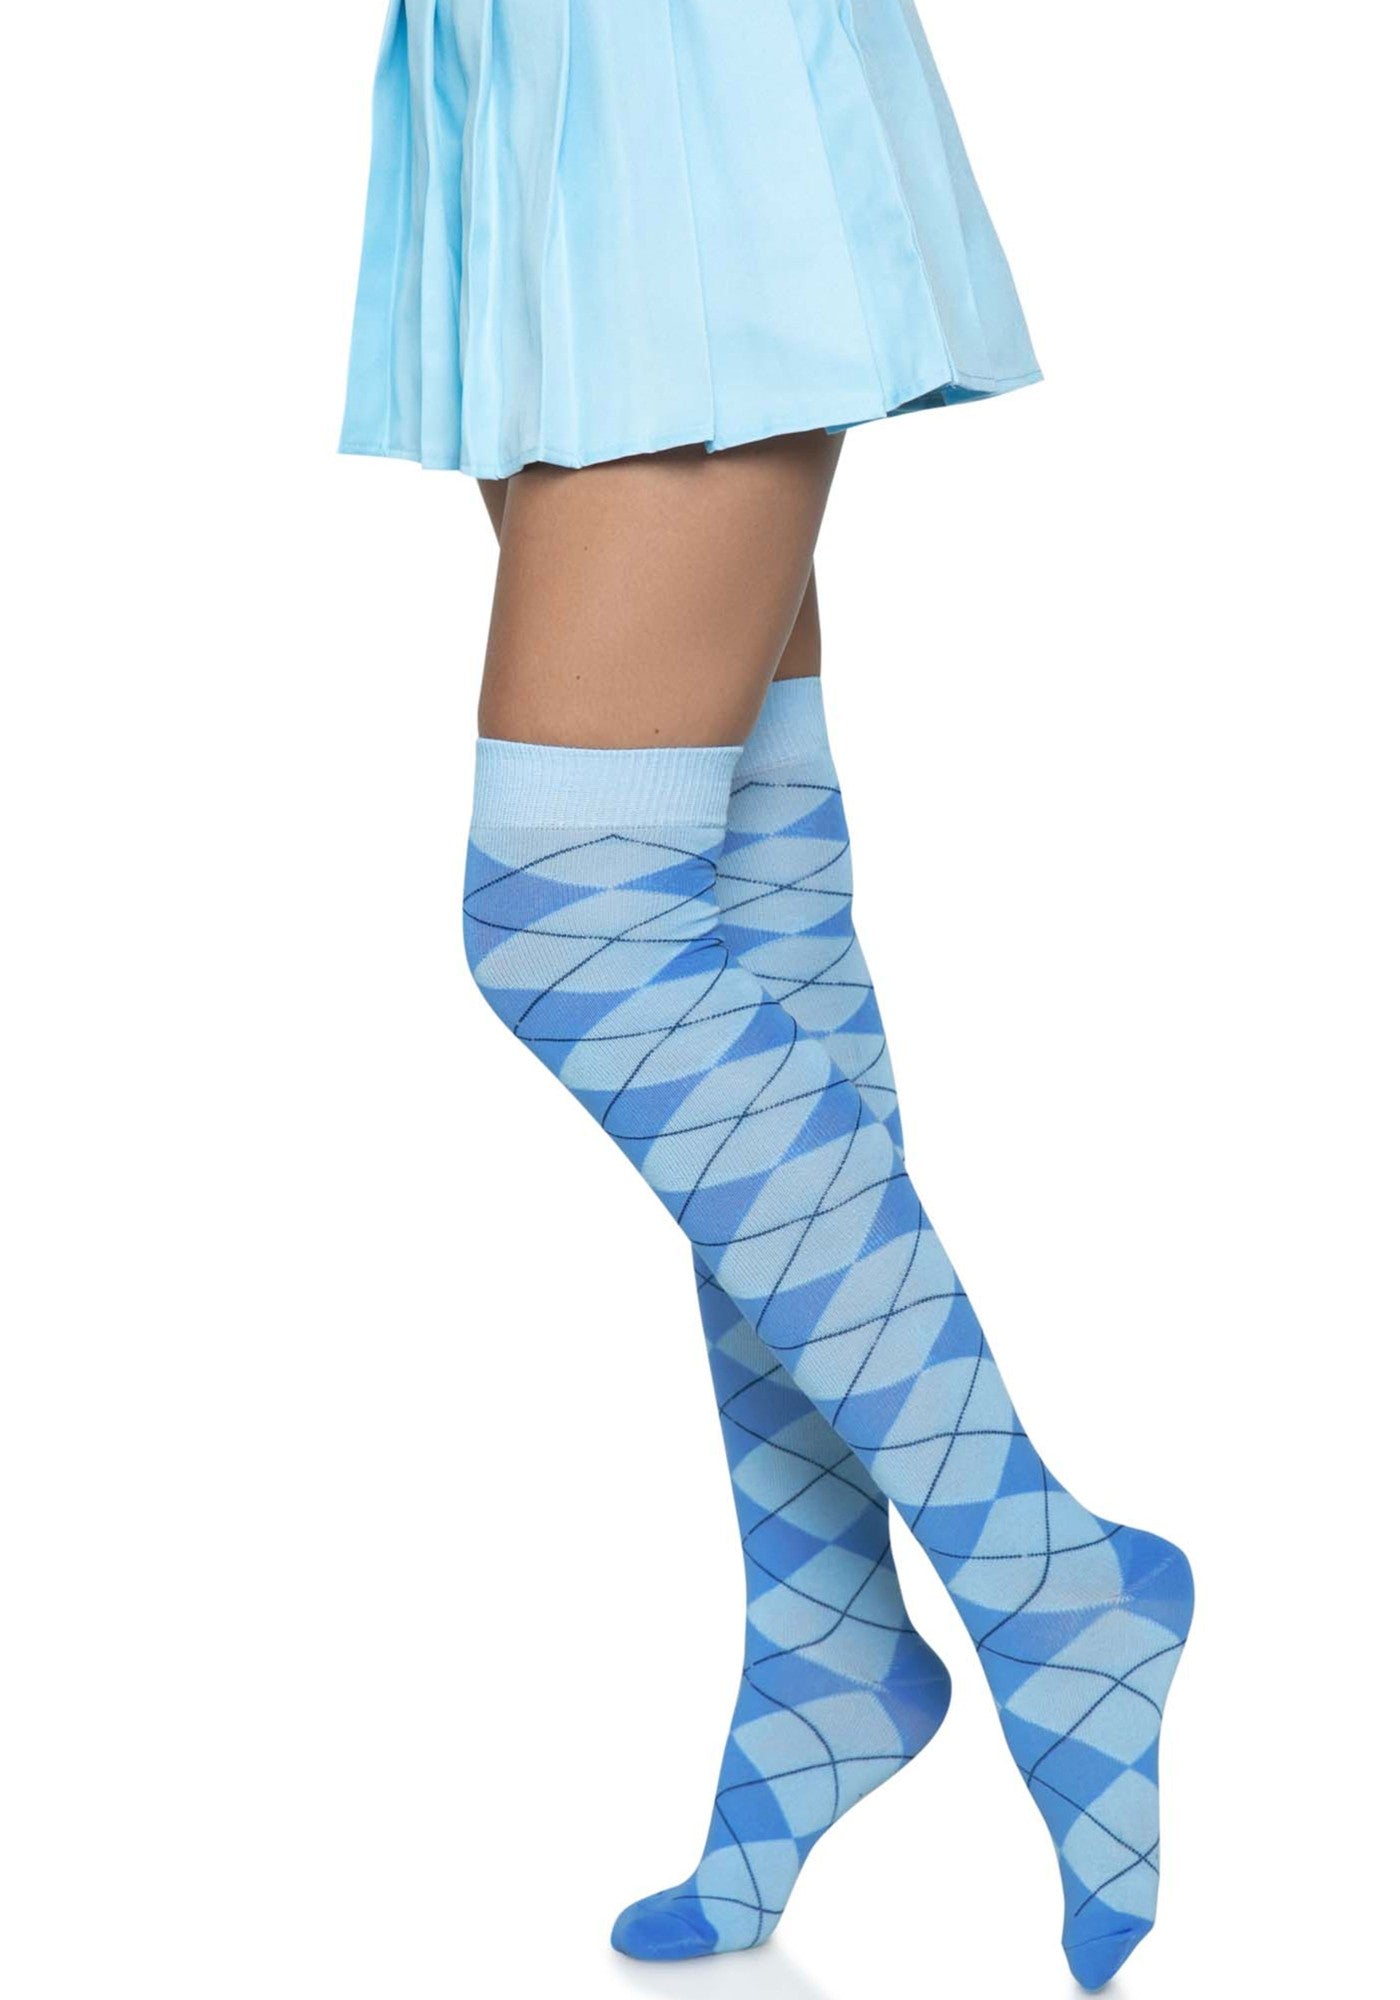 Leg Avenue Argyle Thigh Highs - Blue knitted argyle diamond golf style patterned over the knee socks.